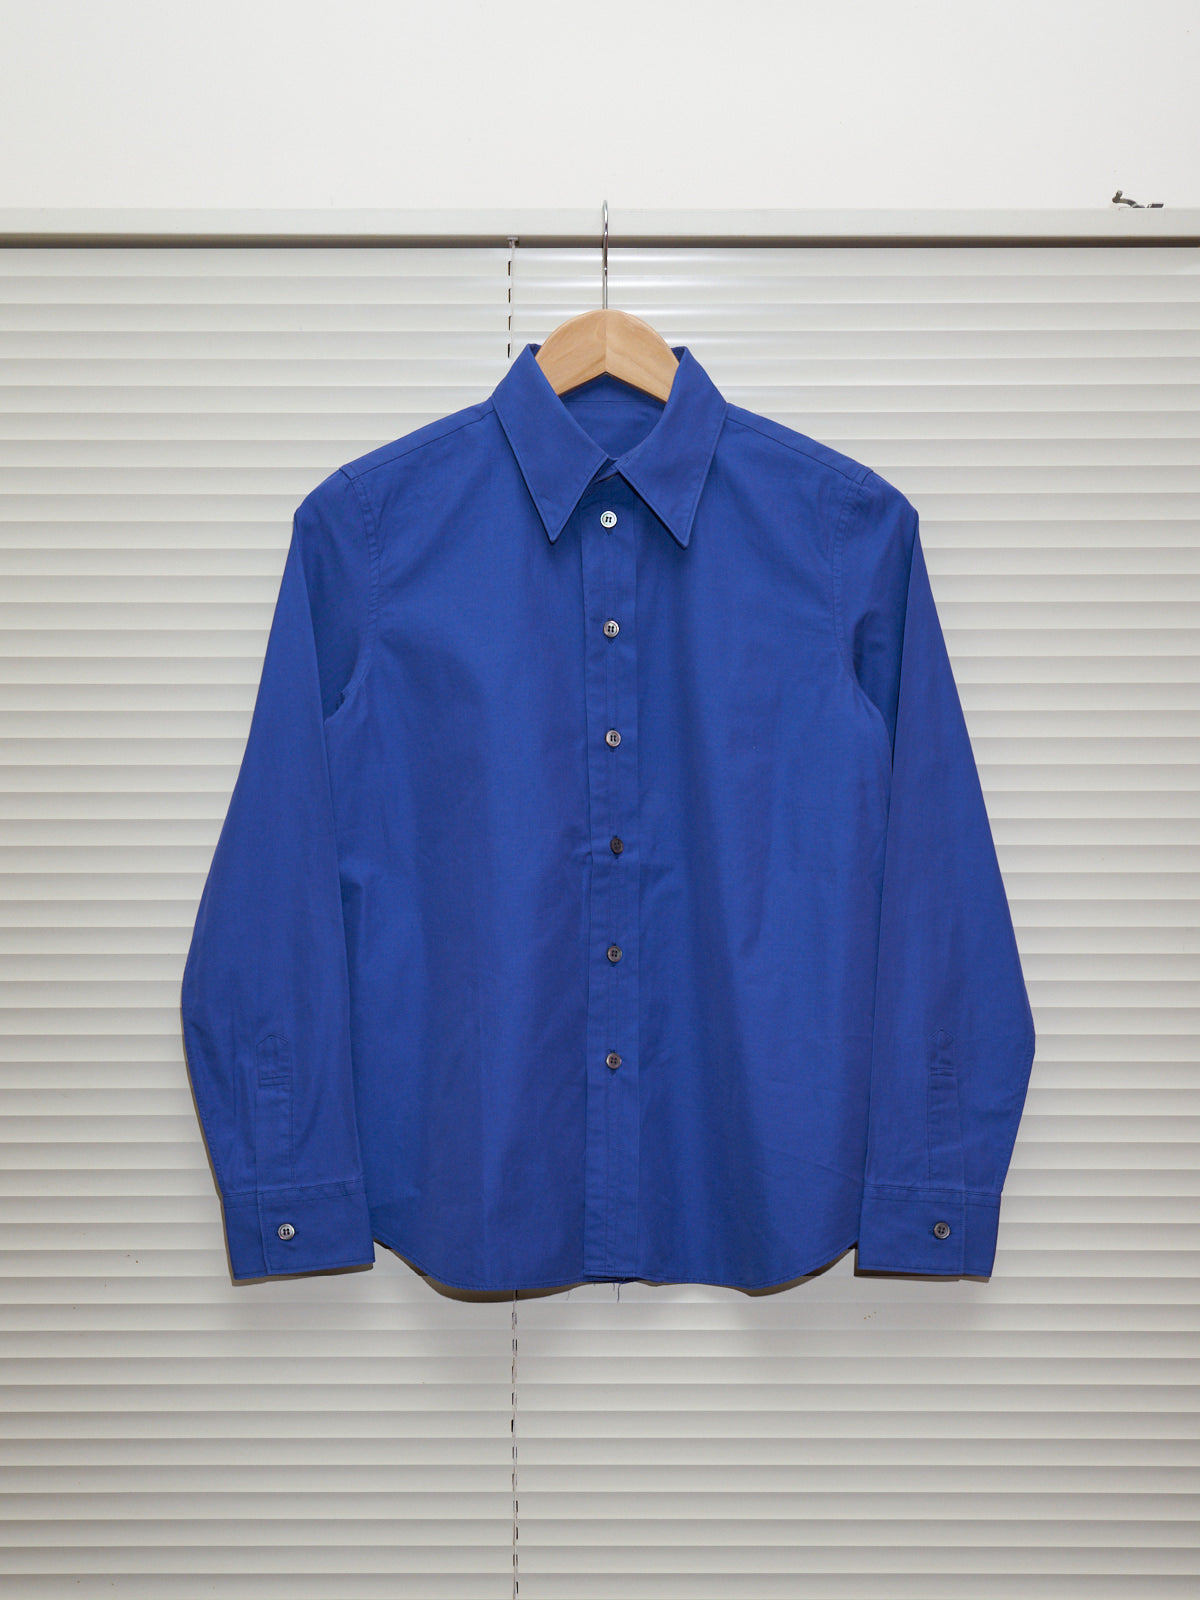 Masaki Matsushima 1990s blue cotton shirt - womens S M